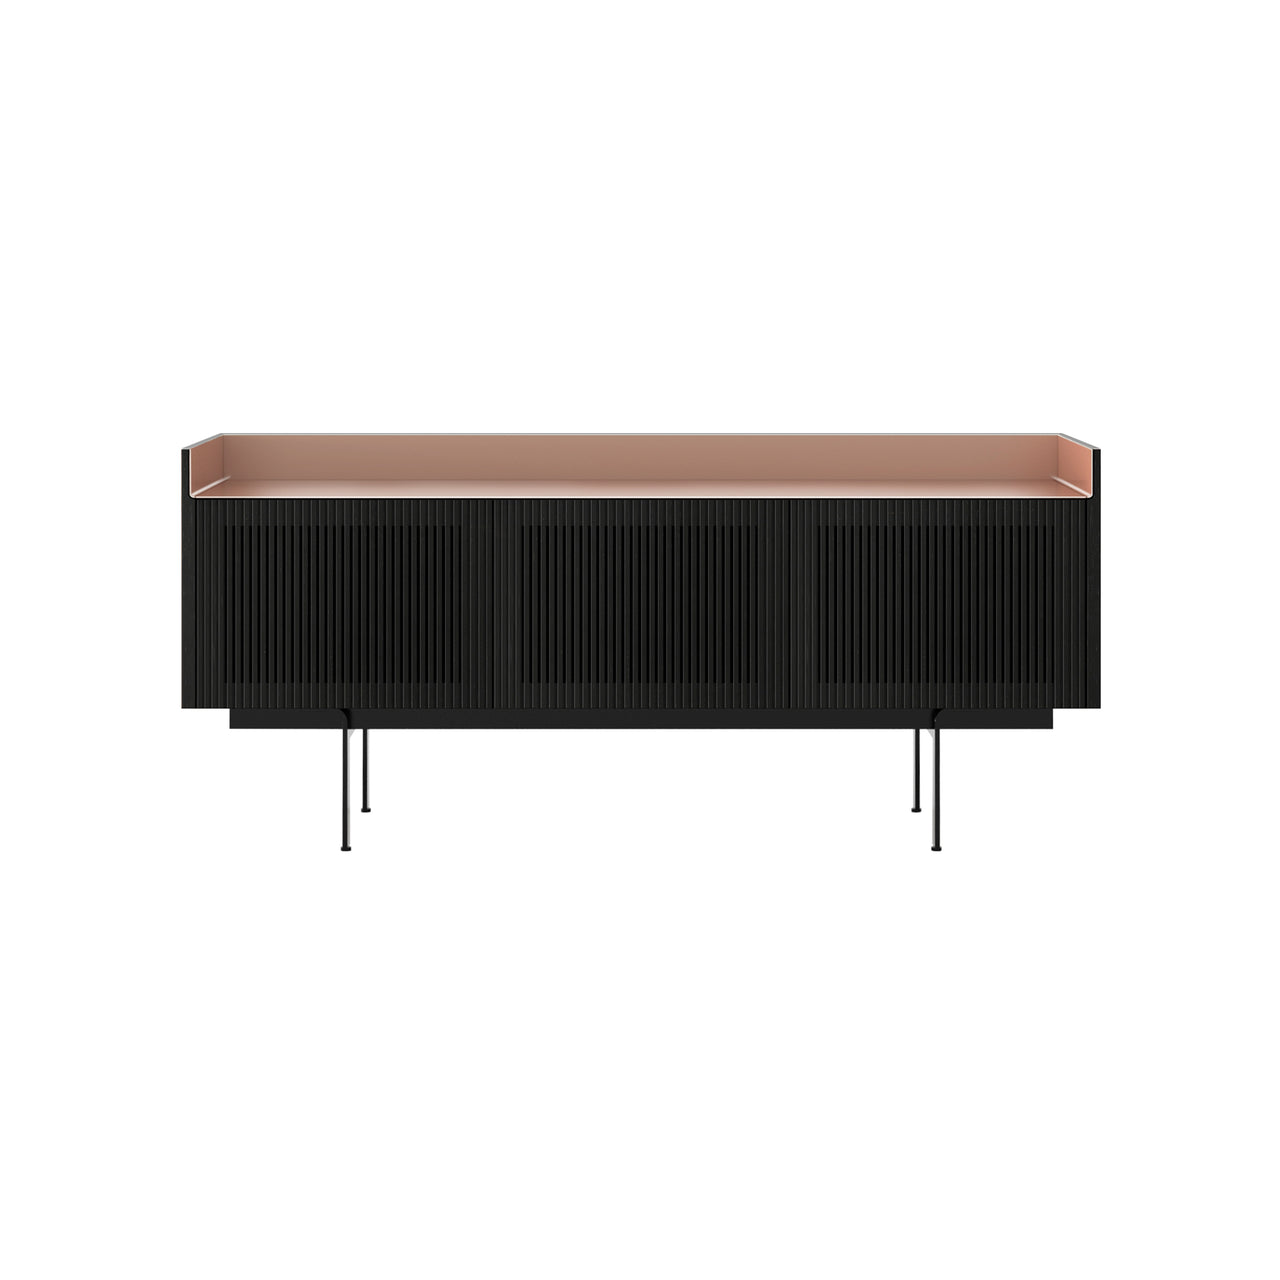 Stockholm Technic Sideboard: STH304 + Ebony Stained Oak + Anodized Aluminum Pale Rose + Black